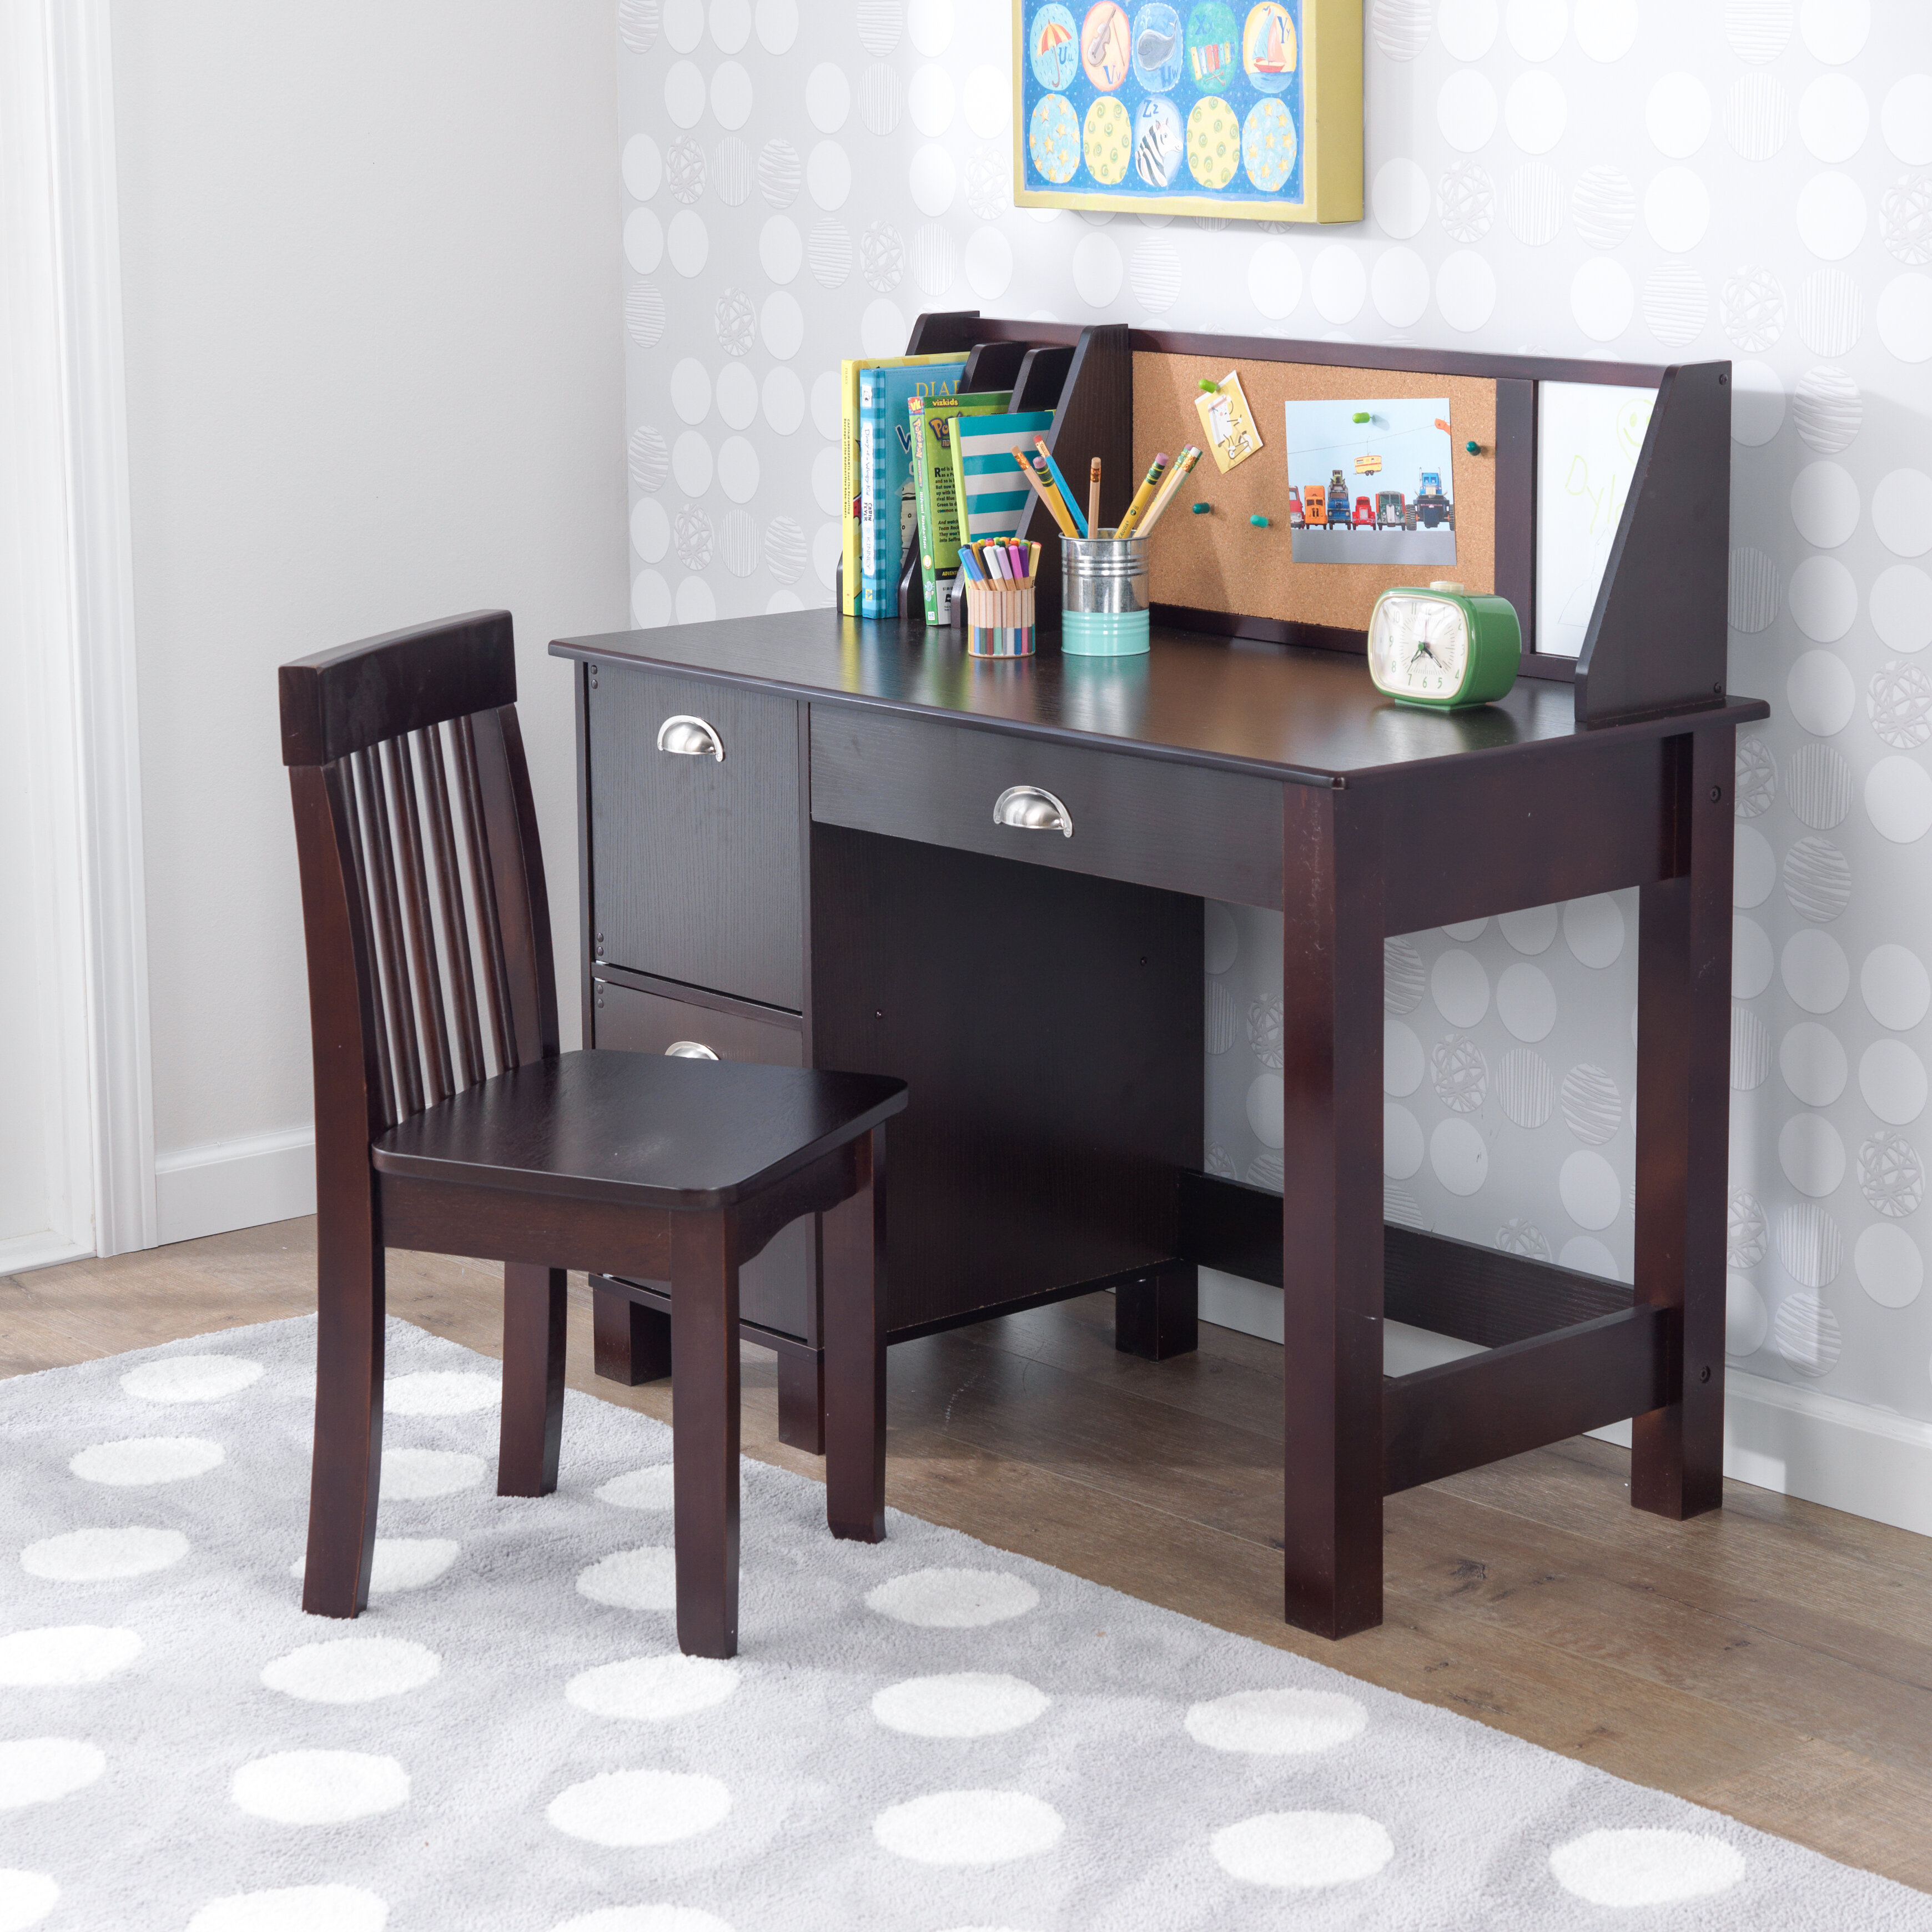 Kids Desks: Study Desk and Chair - White